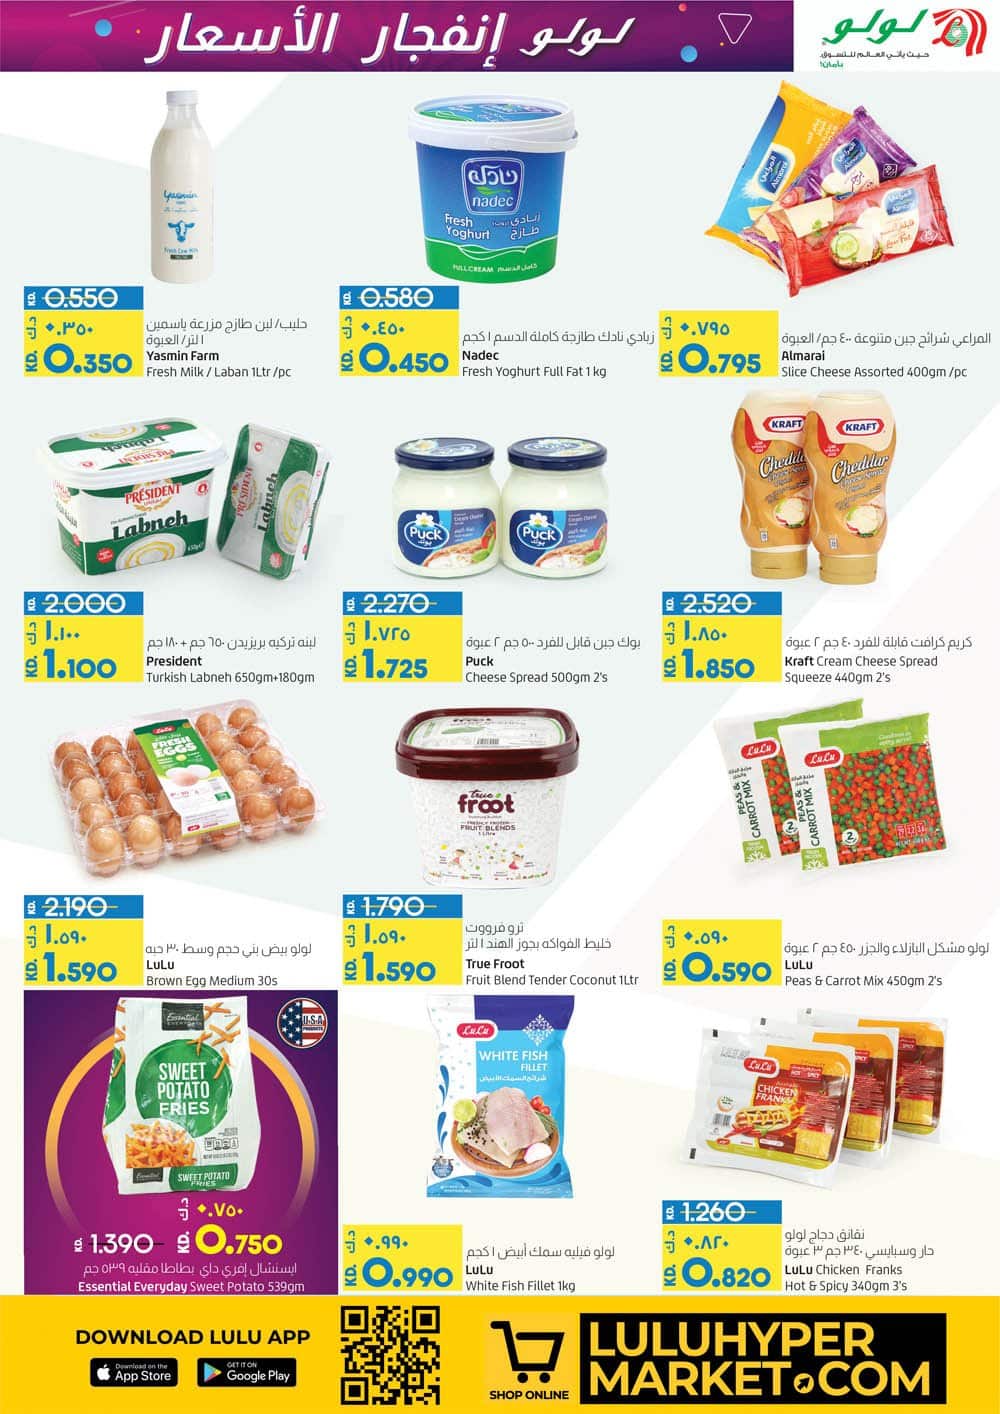 Lulu Hypermarket Price Blast starts till 24th May, iiQ8 offers 8